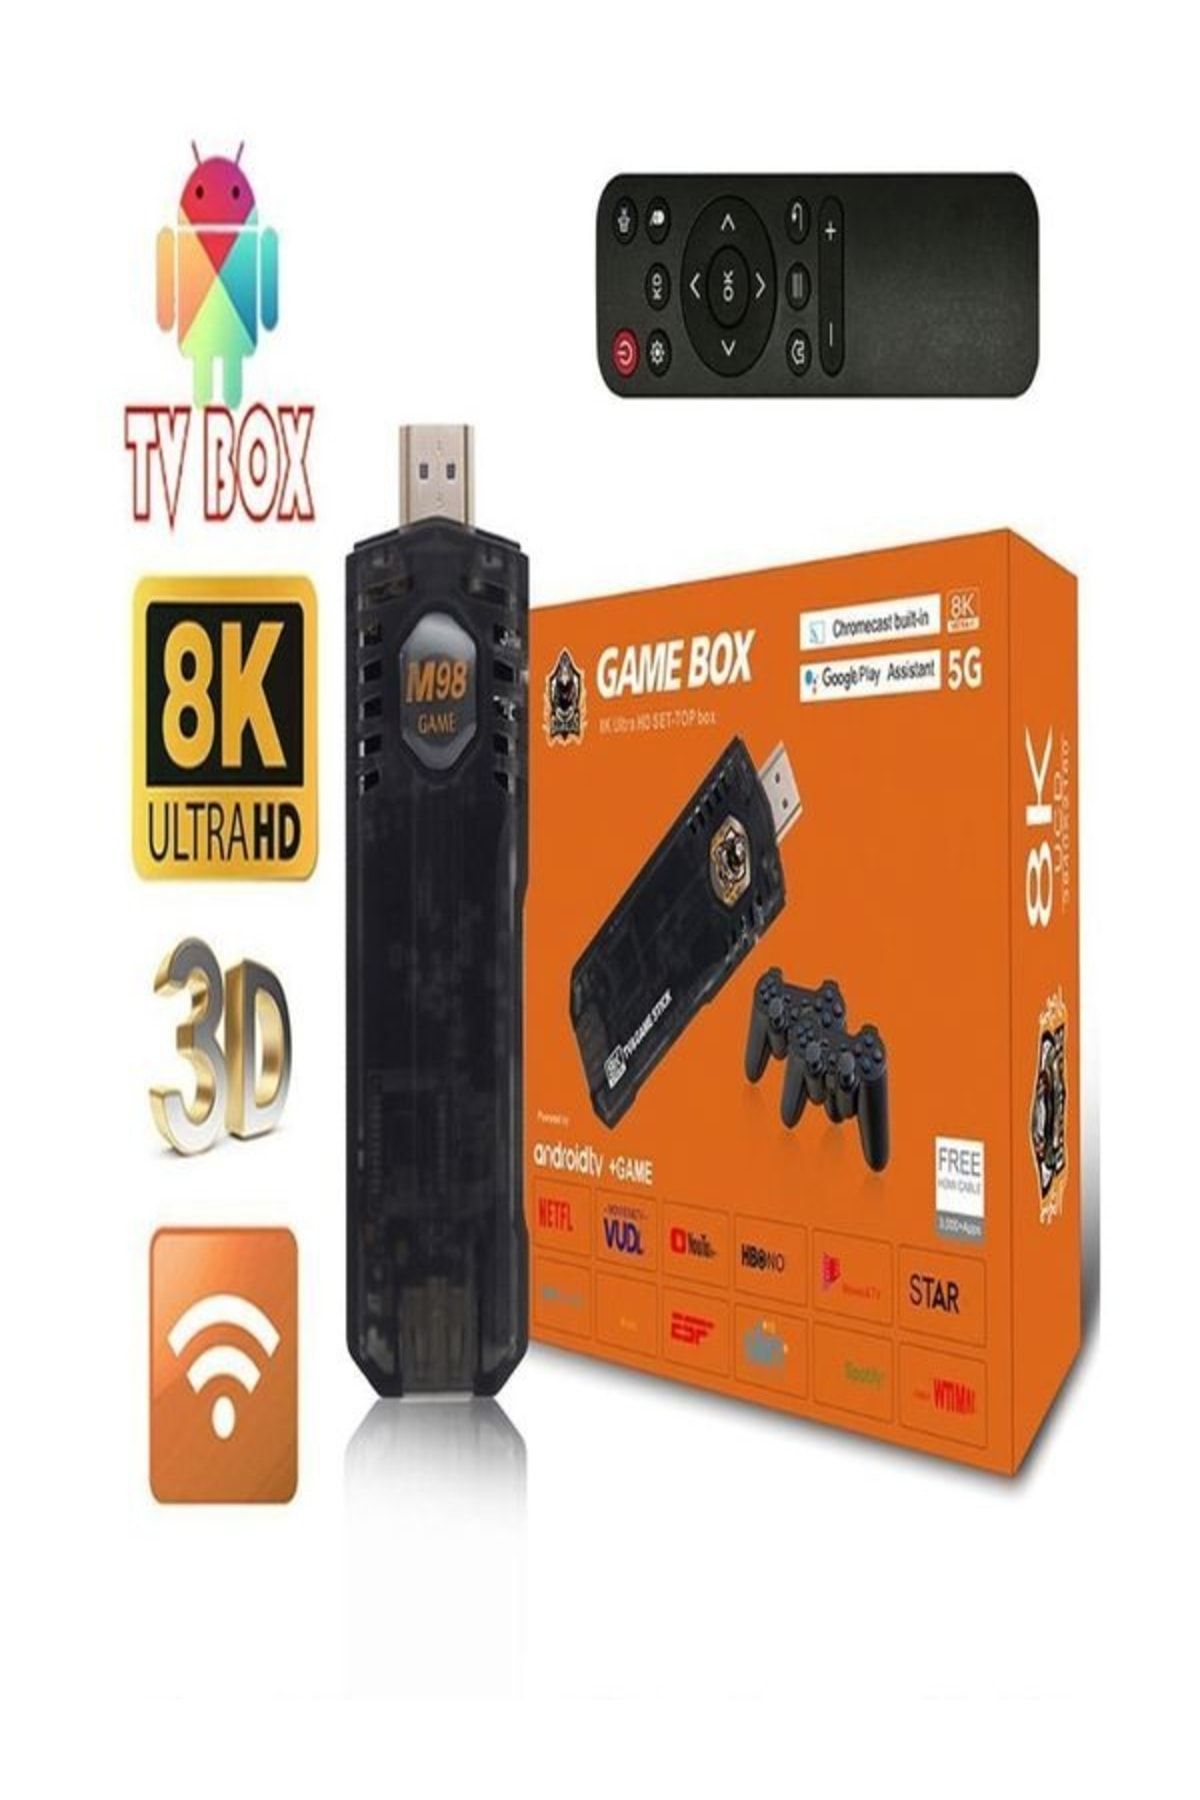 ULTRATEKNO 5g 8k Ultra Hd 64 Gb Tv Box + Game Box Android Tv + Oyun Konsolu 2in1 Netflix